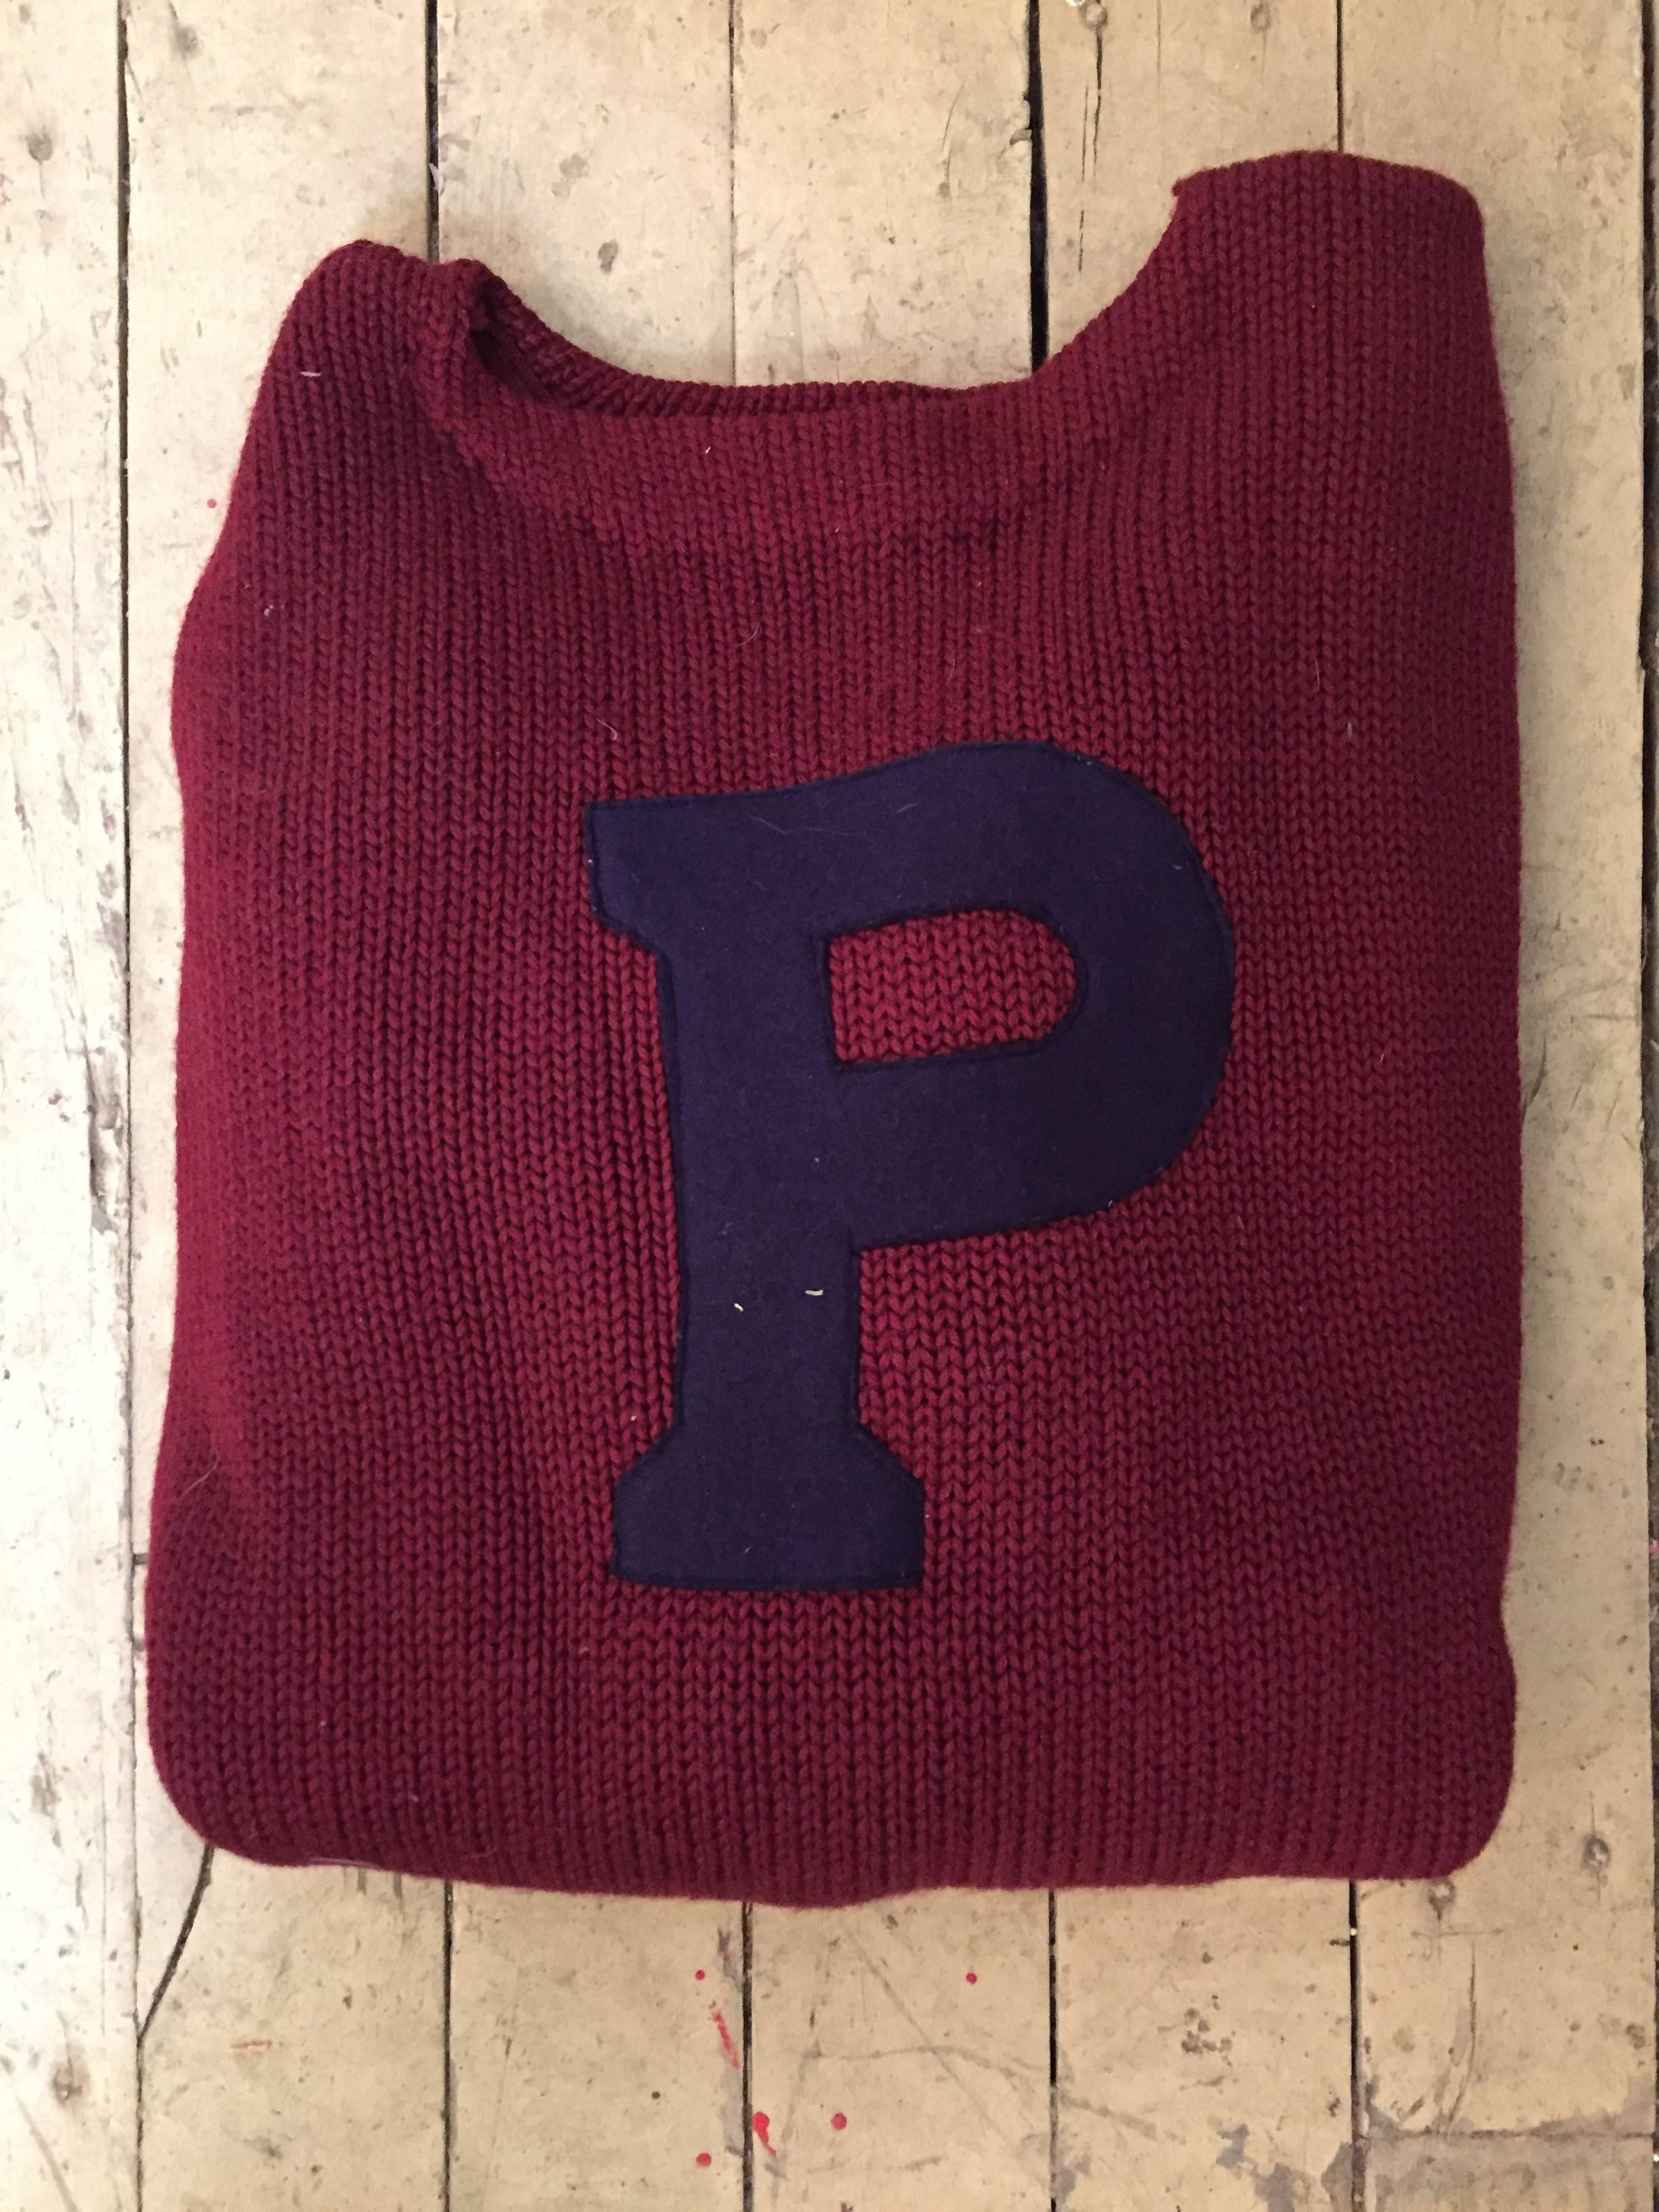 Circa 1930's University of Pennsylvania Letterman Sweater Antique Ivy League Football Memorabilia